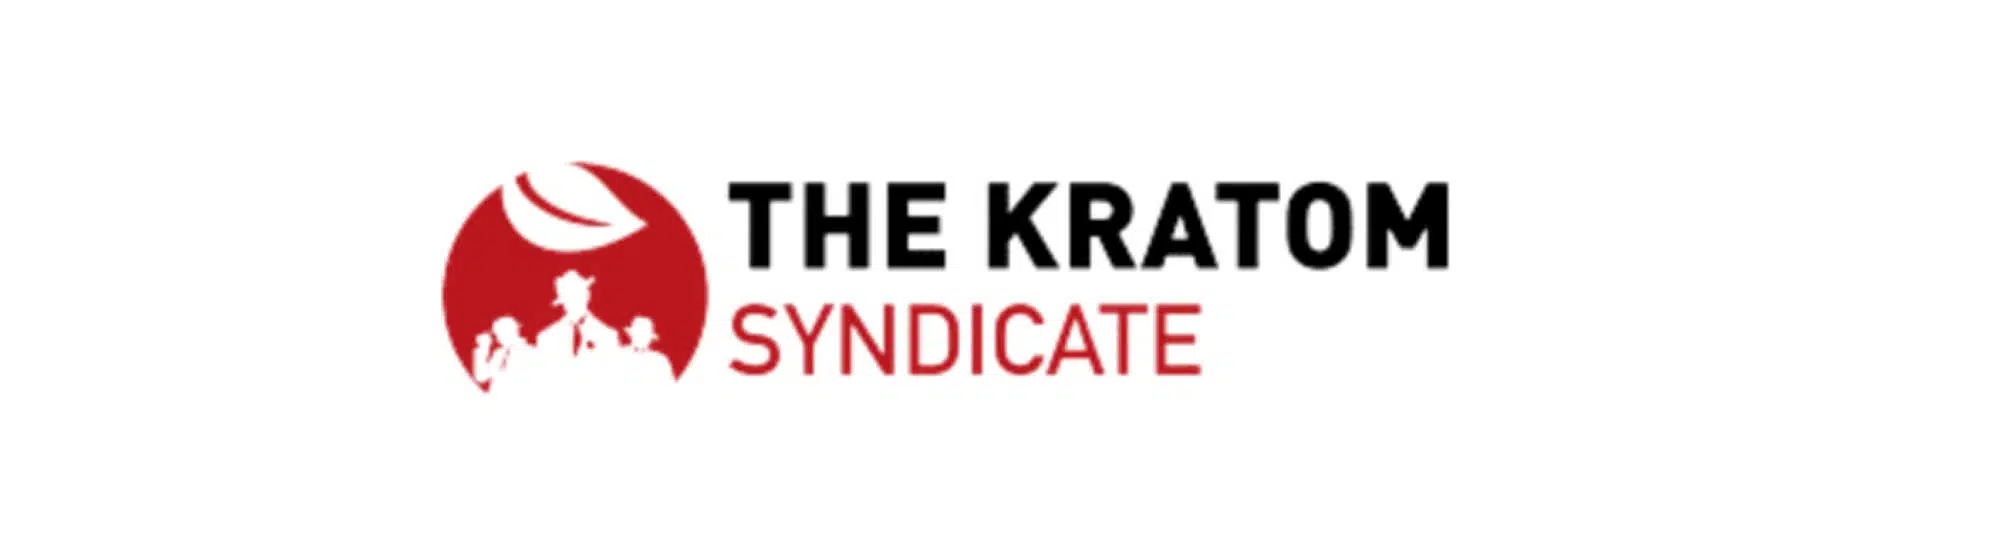 image of the kratom syndicate logo